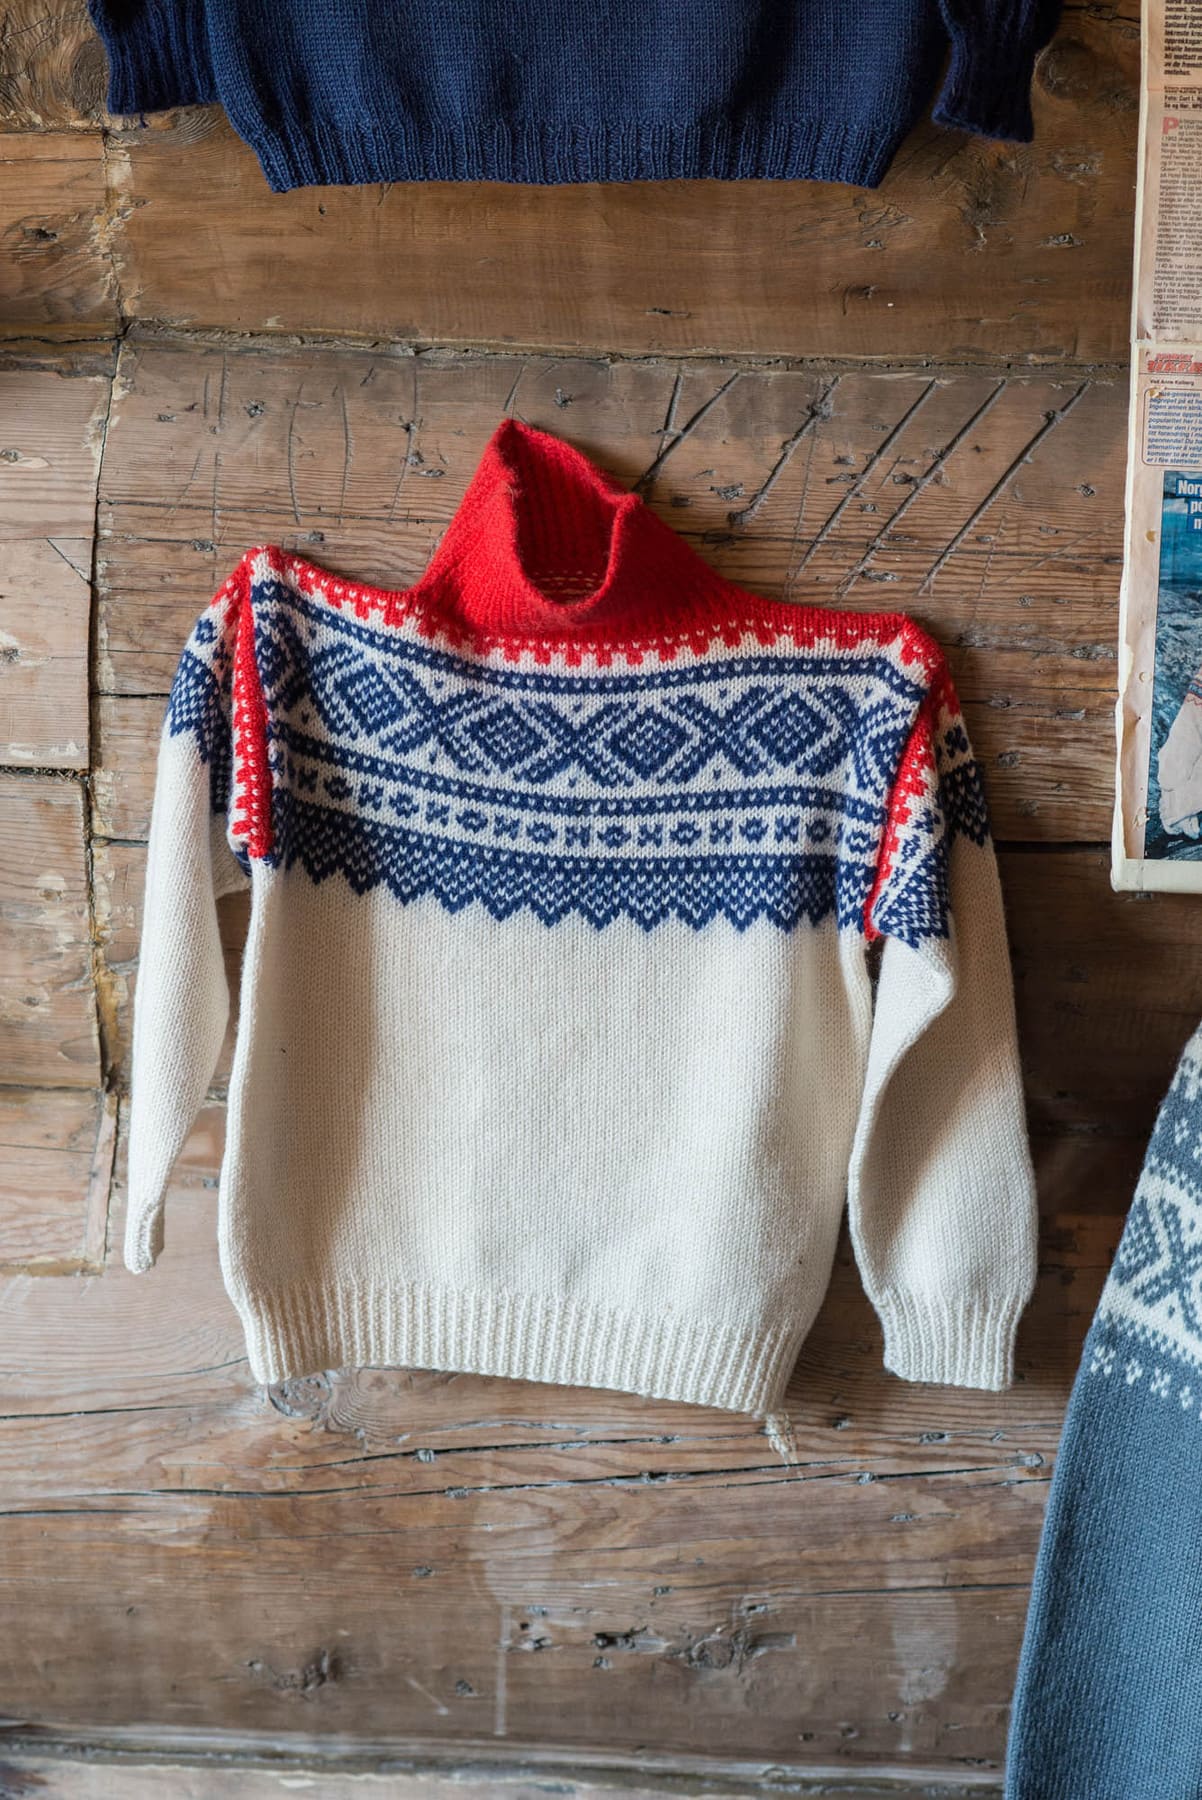 The Norwegian Sweater Detective | The Craftsmanship Initiative